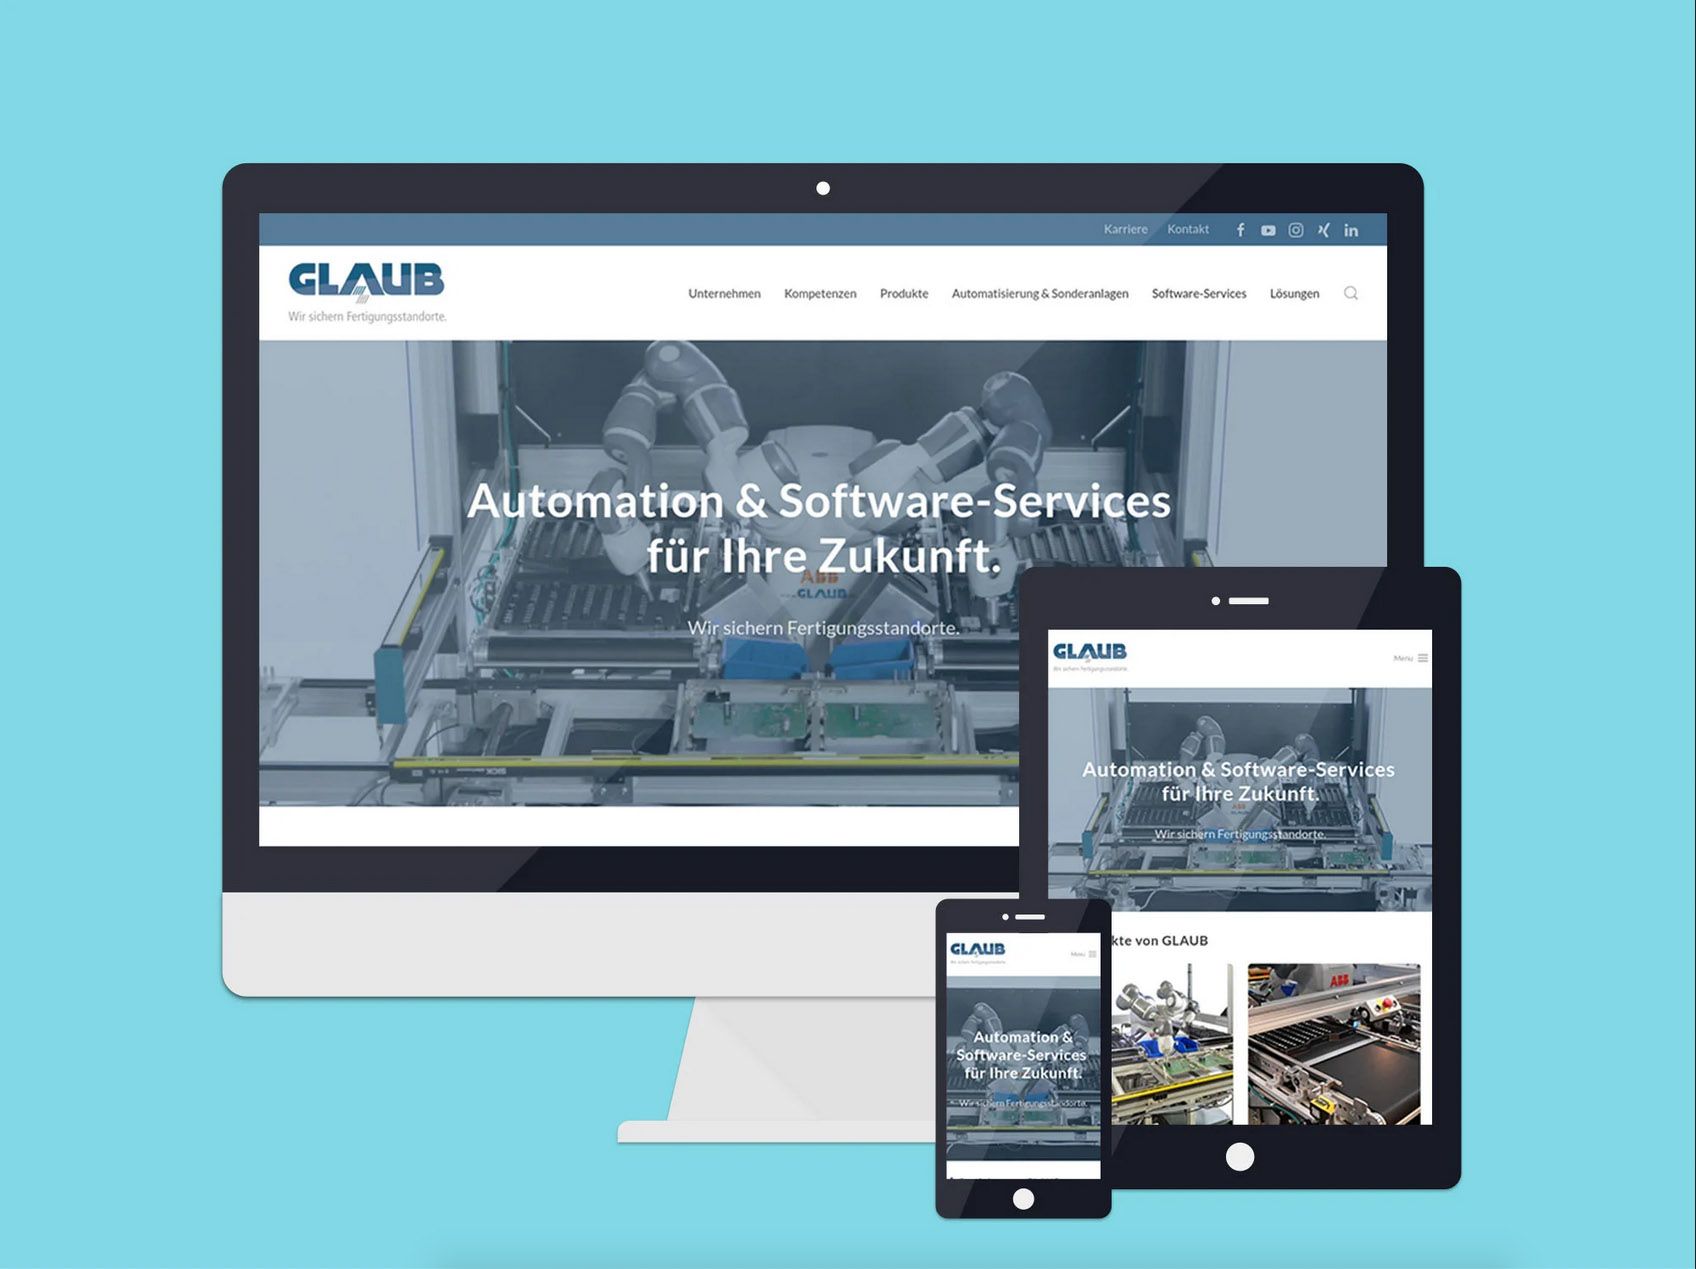 Glaub Automation & Engineering GmbH